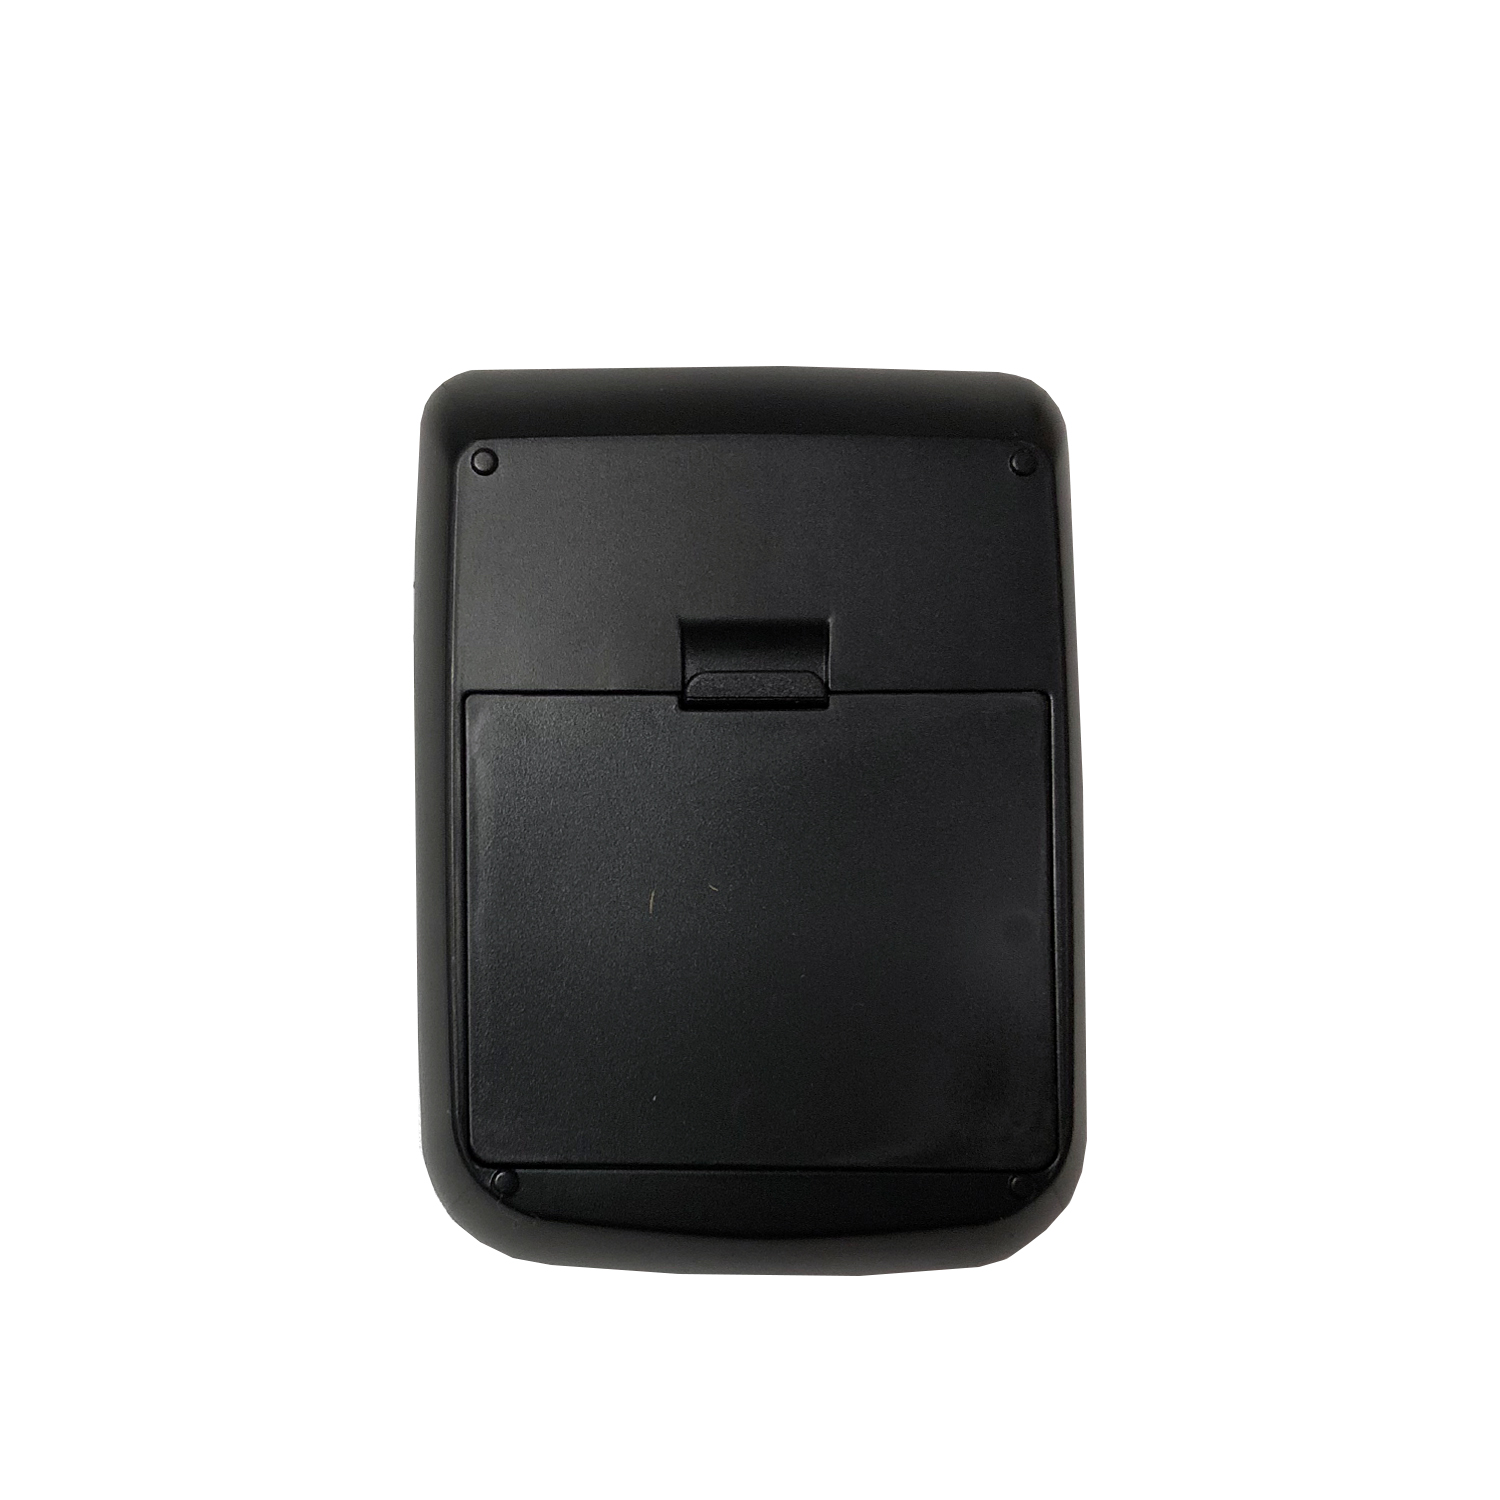 HCCTG Impresora térmica móvil Bluetooth de 58 mm, 384 puntos/línea, HCC-T12